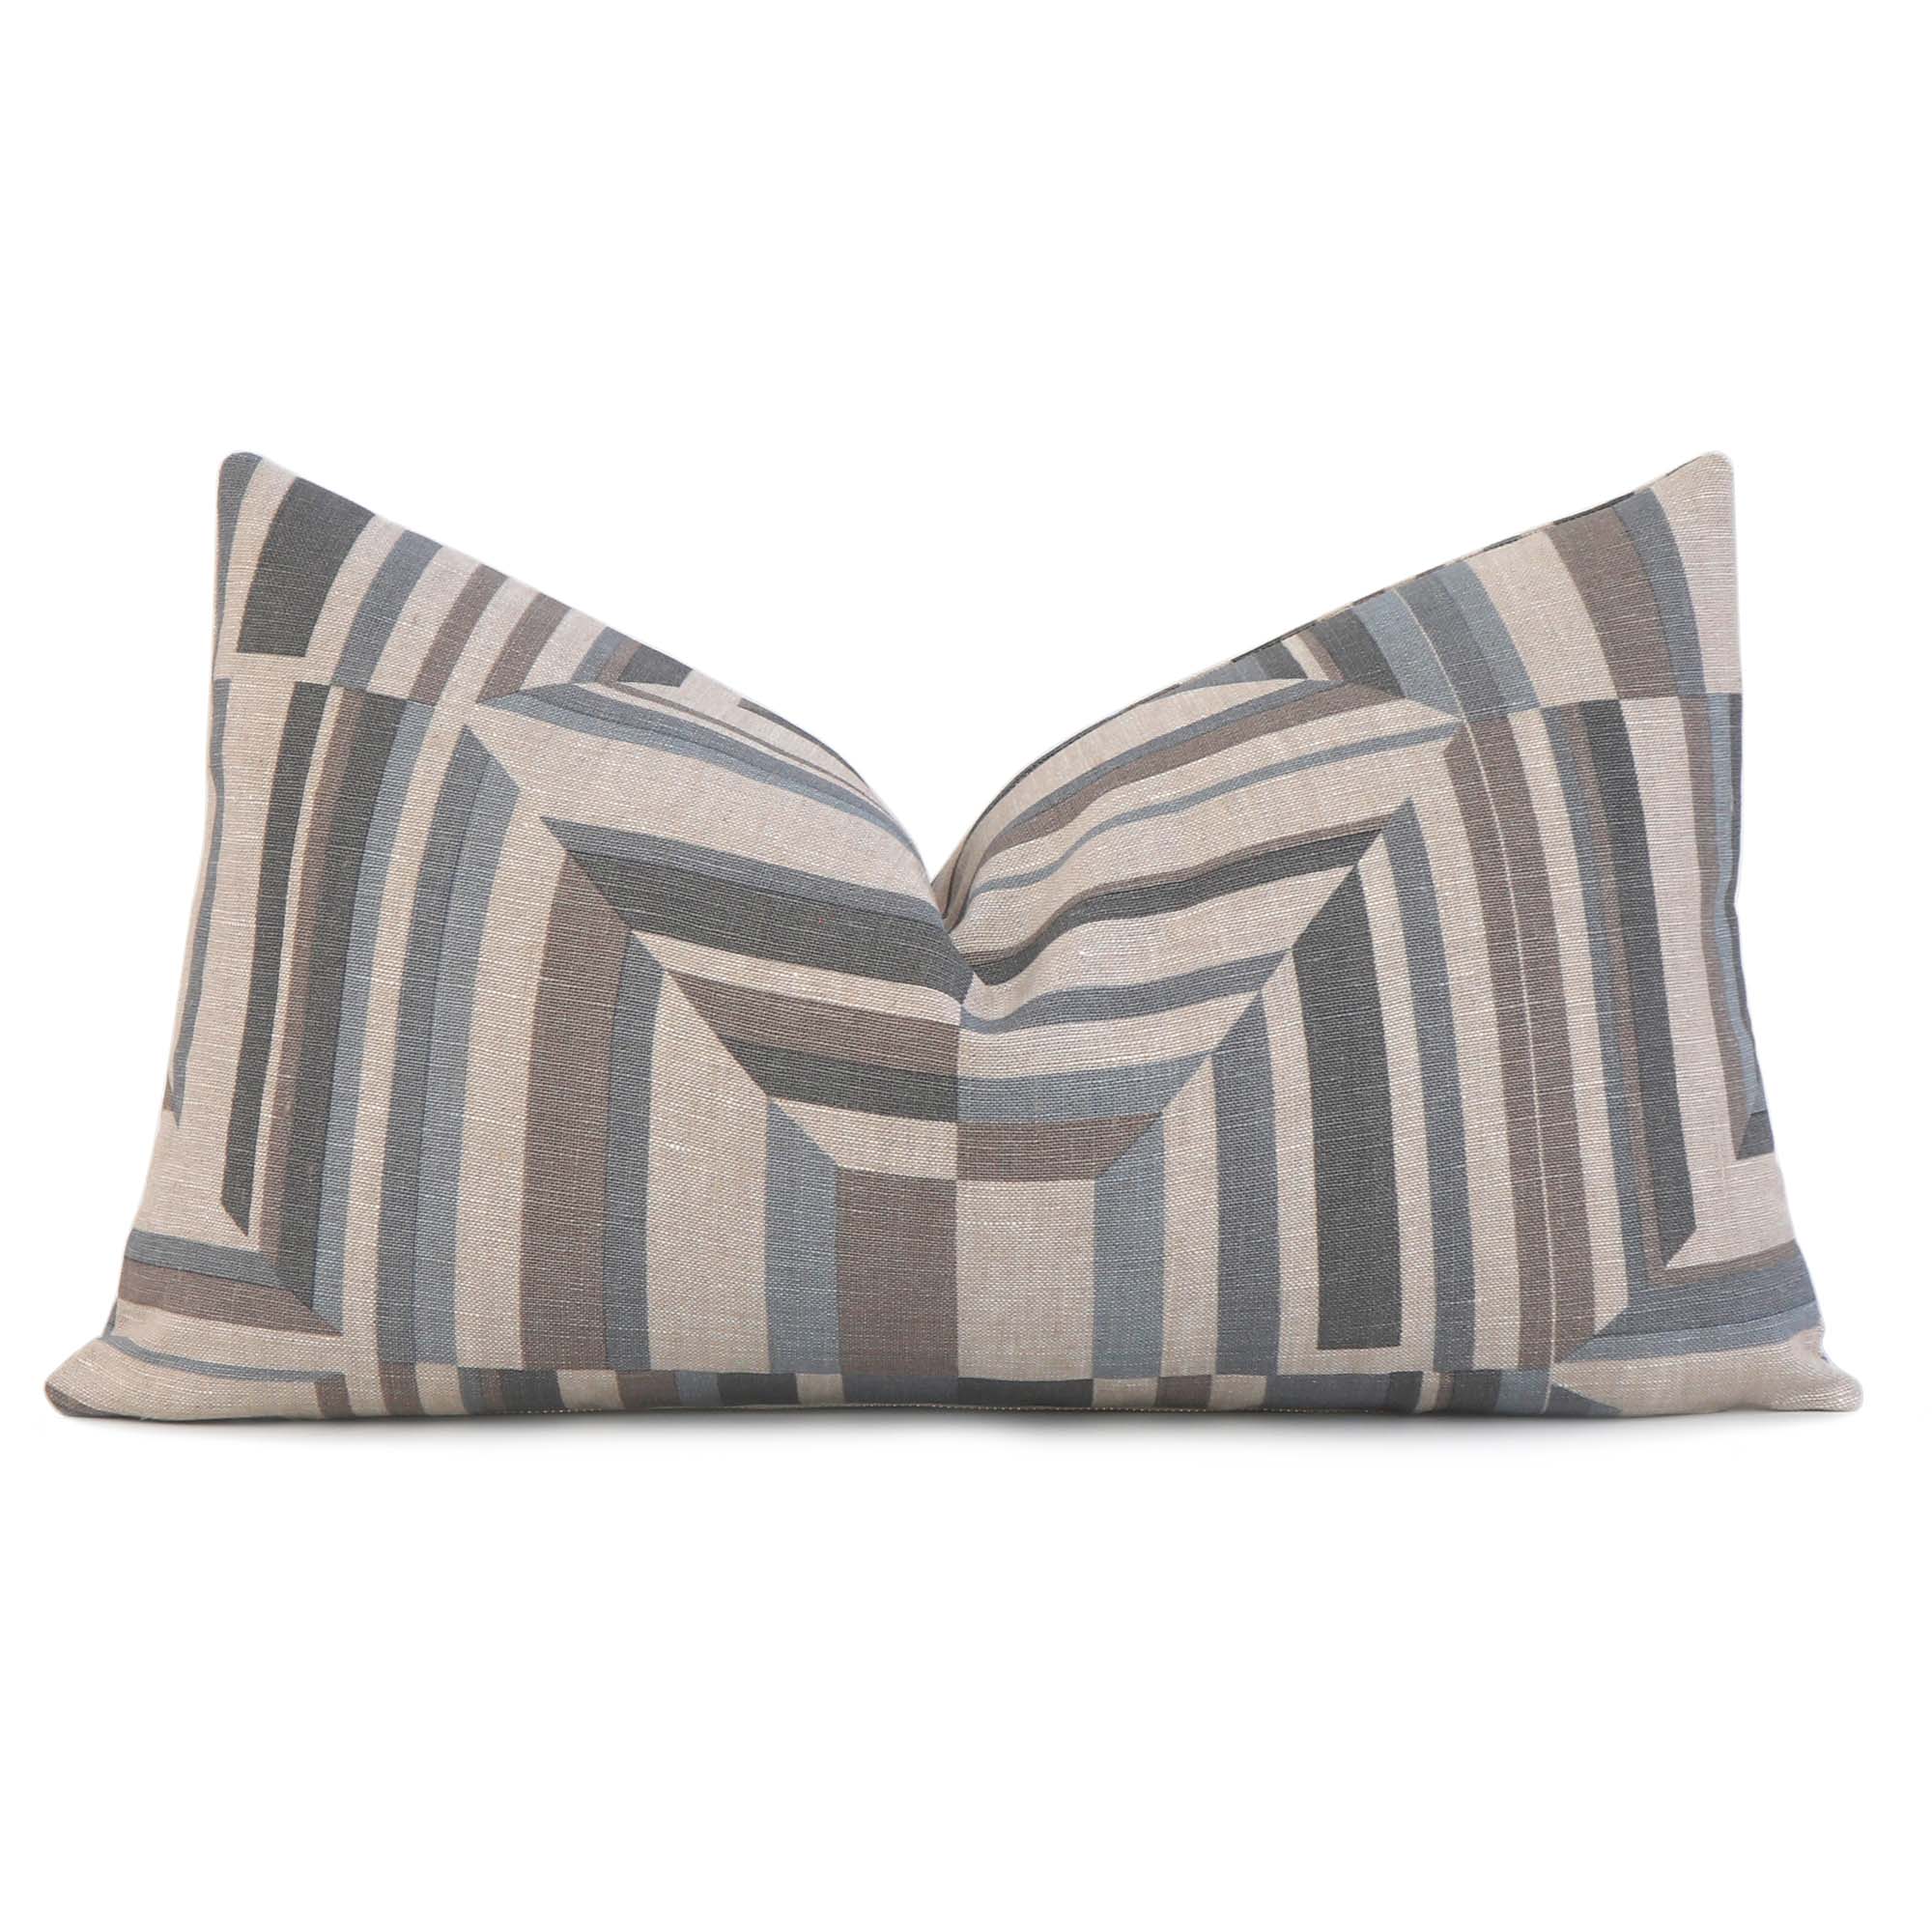 Thibaut Cubism Geometric Spa Blue on Flax Stripes Linen Designer Luxury Decorative Lumbar Throw Pillow Cover